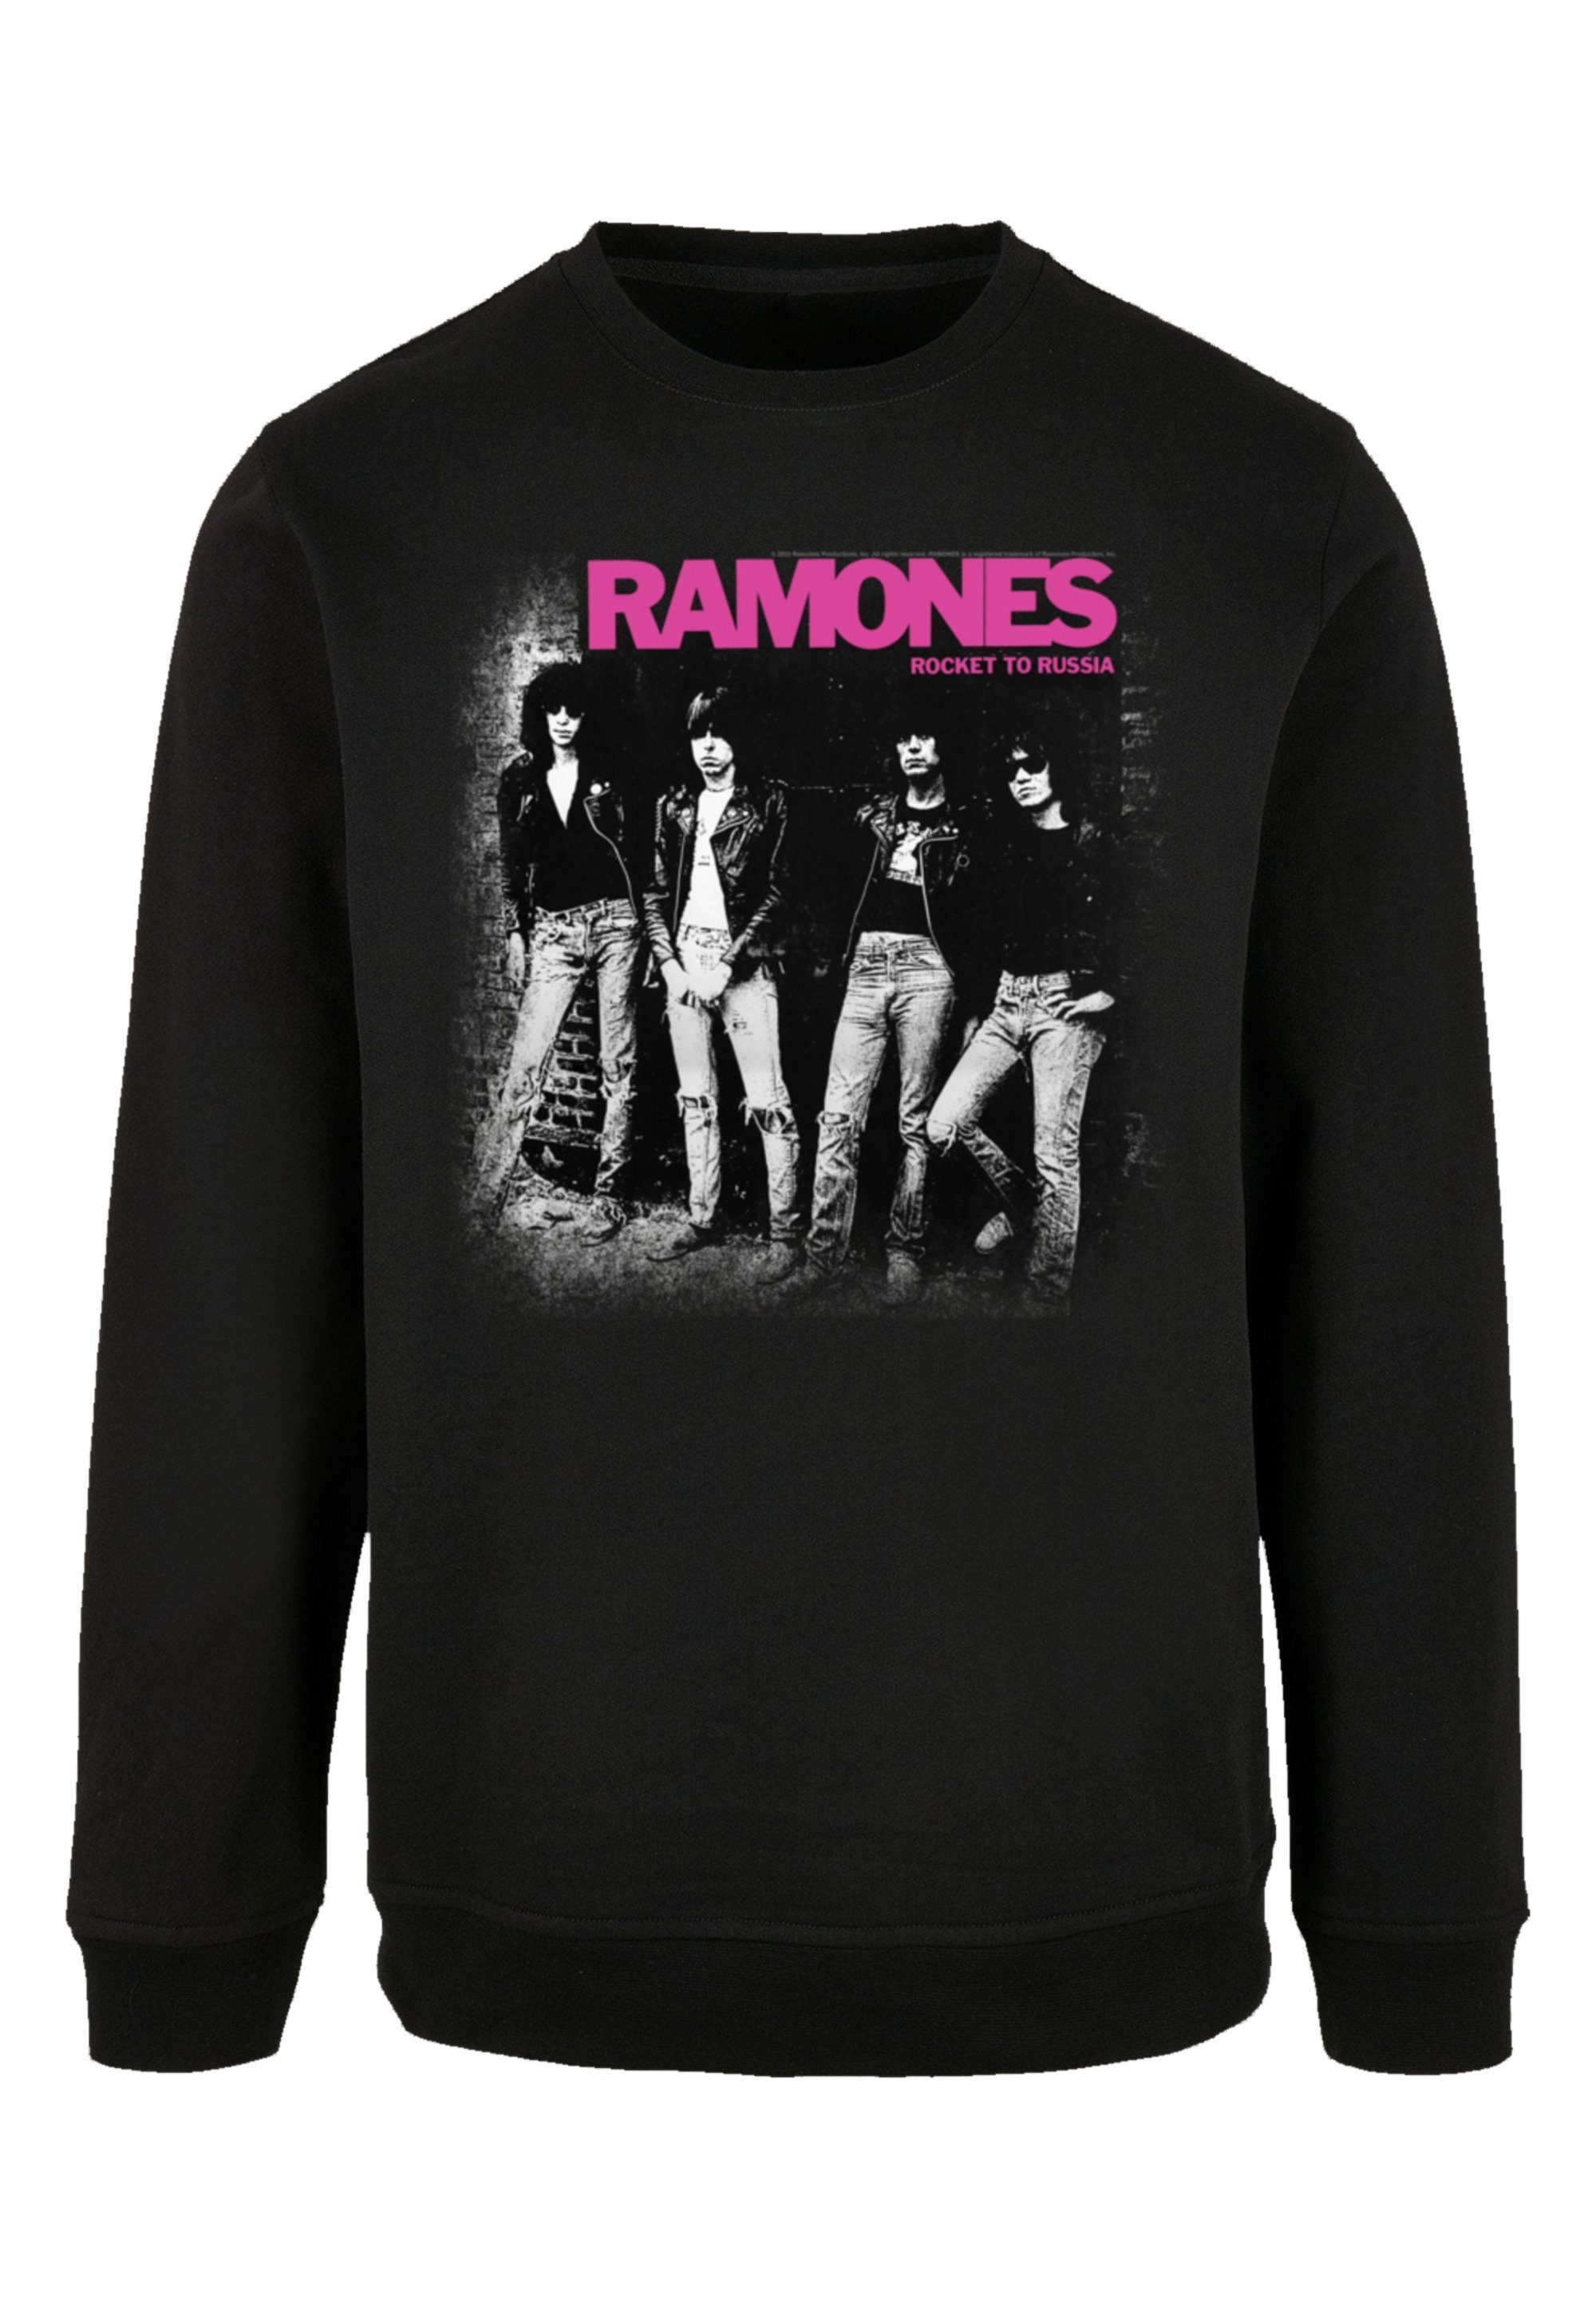 Faded Rocket Sweatshirt Russia Ramones Premium F4NT4STIC Band, Rock To Qualität, Band Rock-Musik Musik